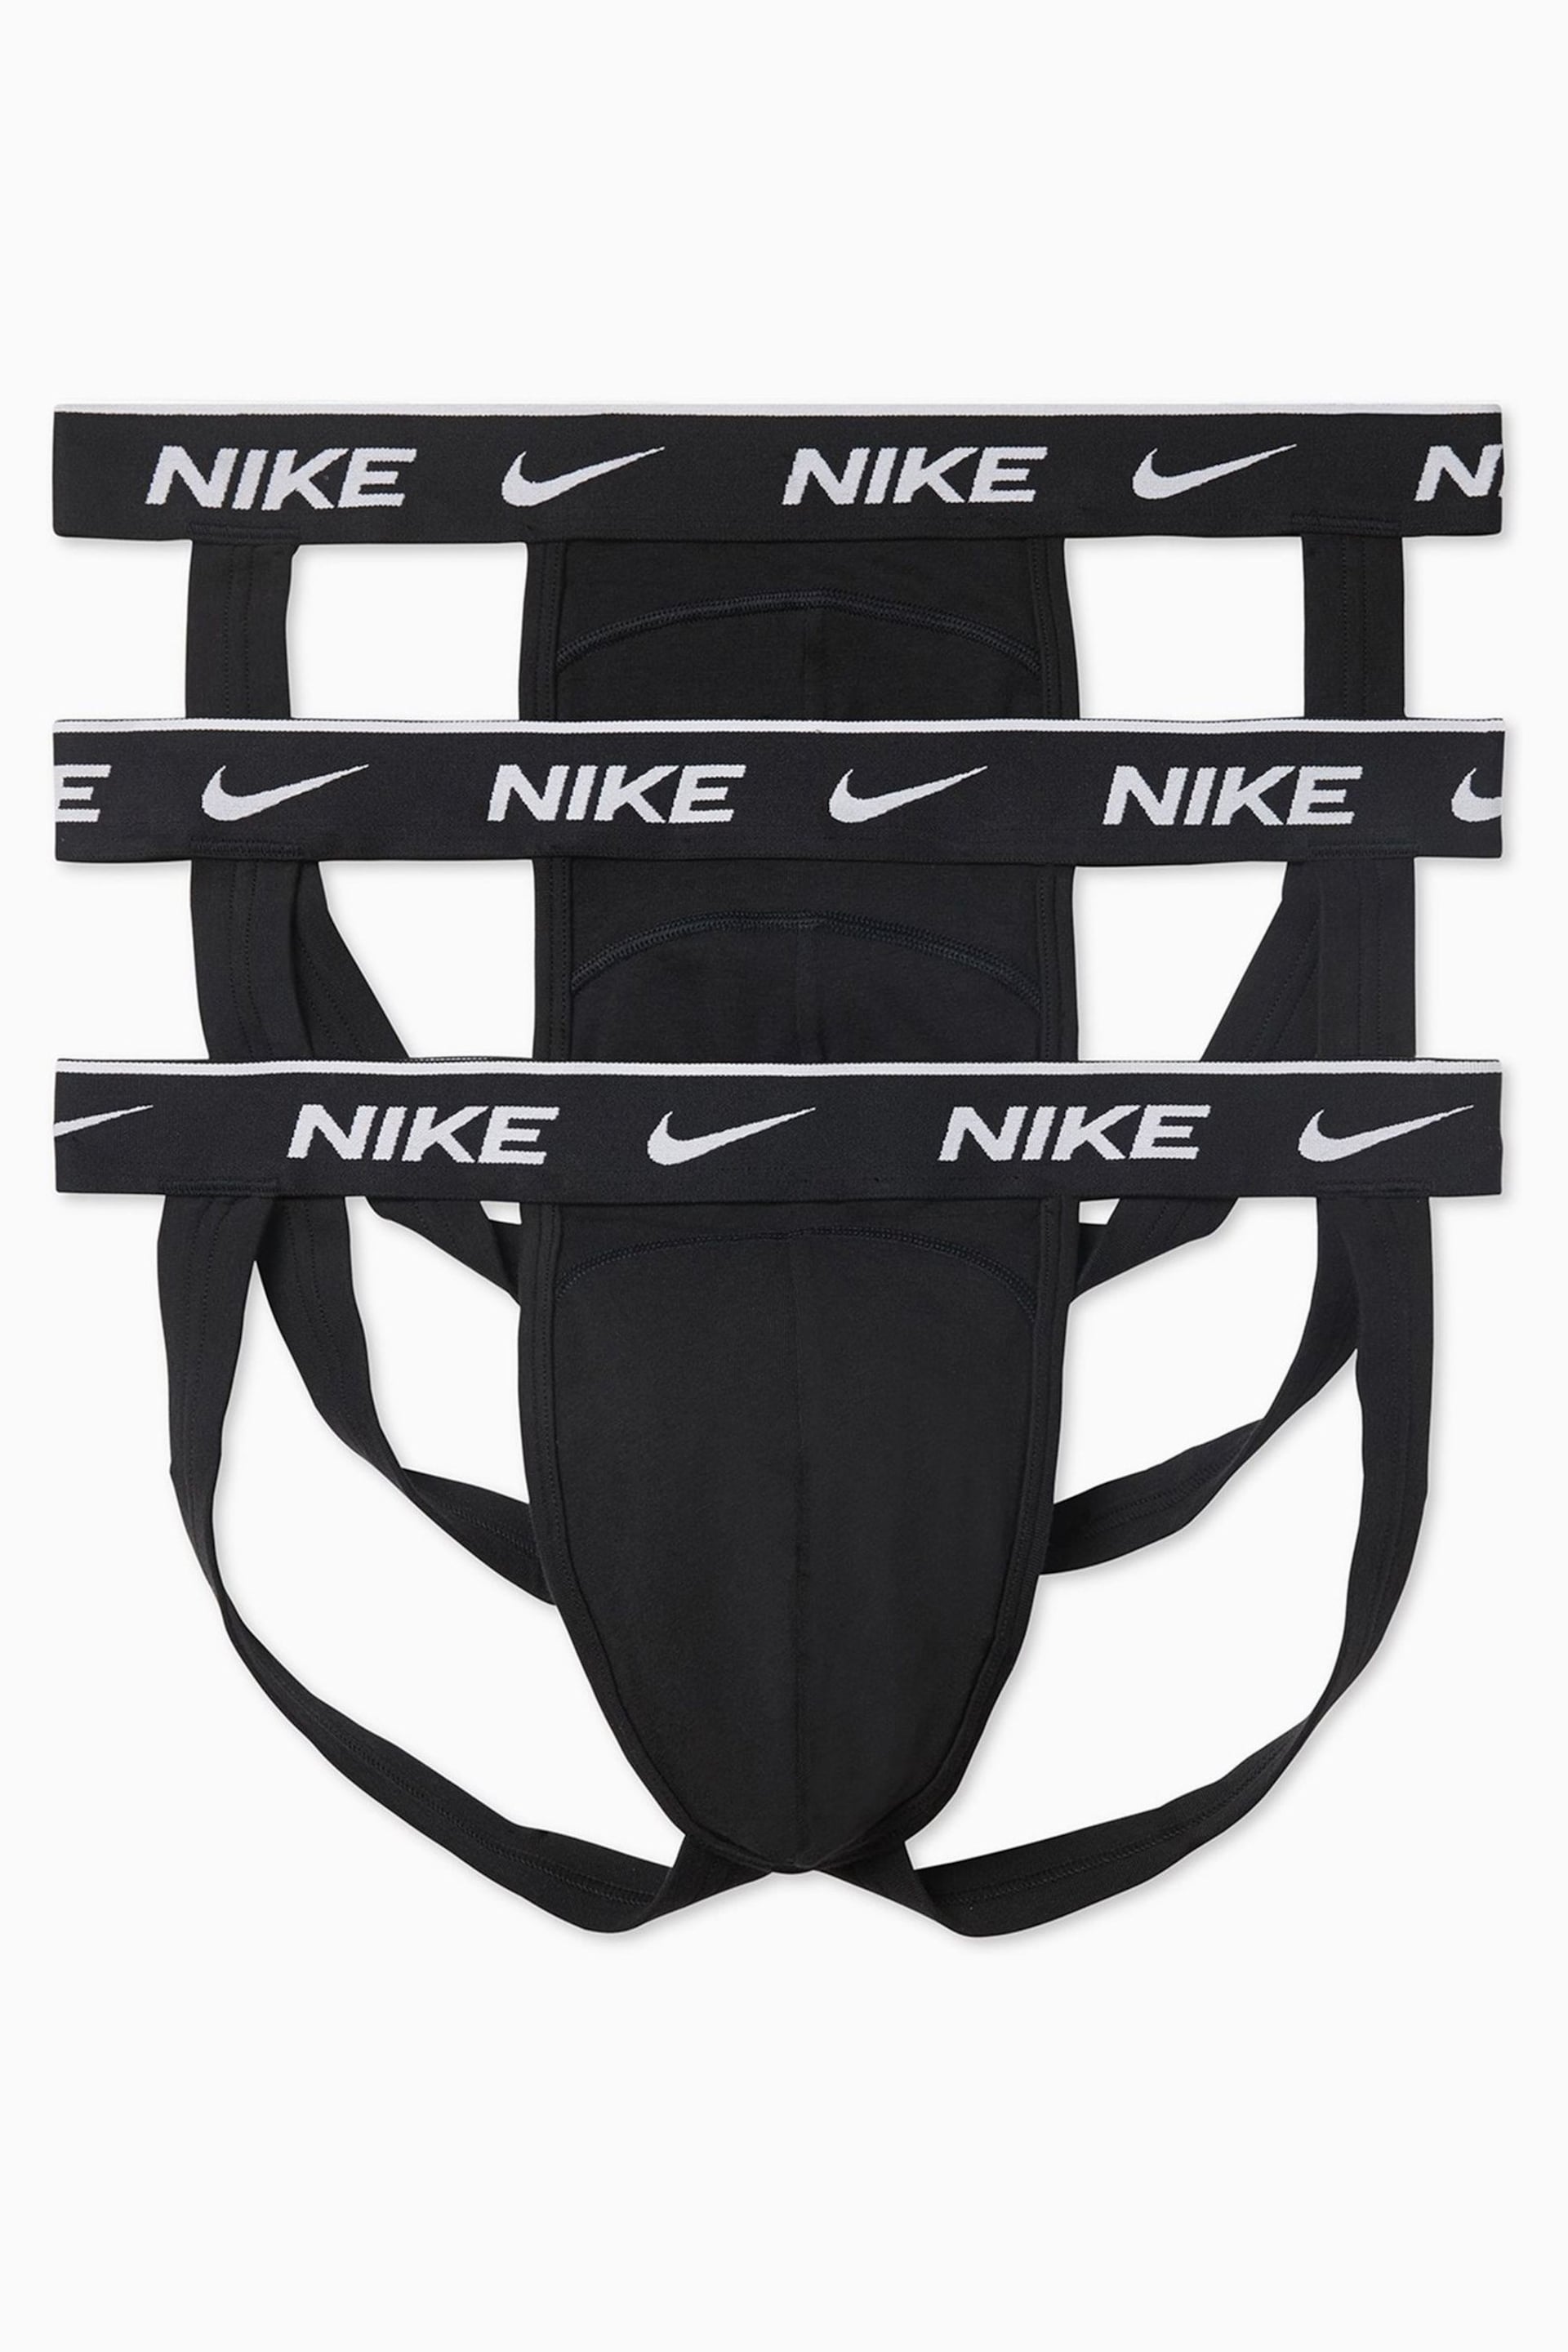 Nike Black Everyday Cotton Stretch Jock Straps 3 Pack - Image 1 of 3